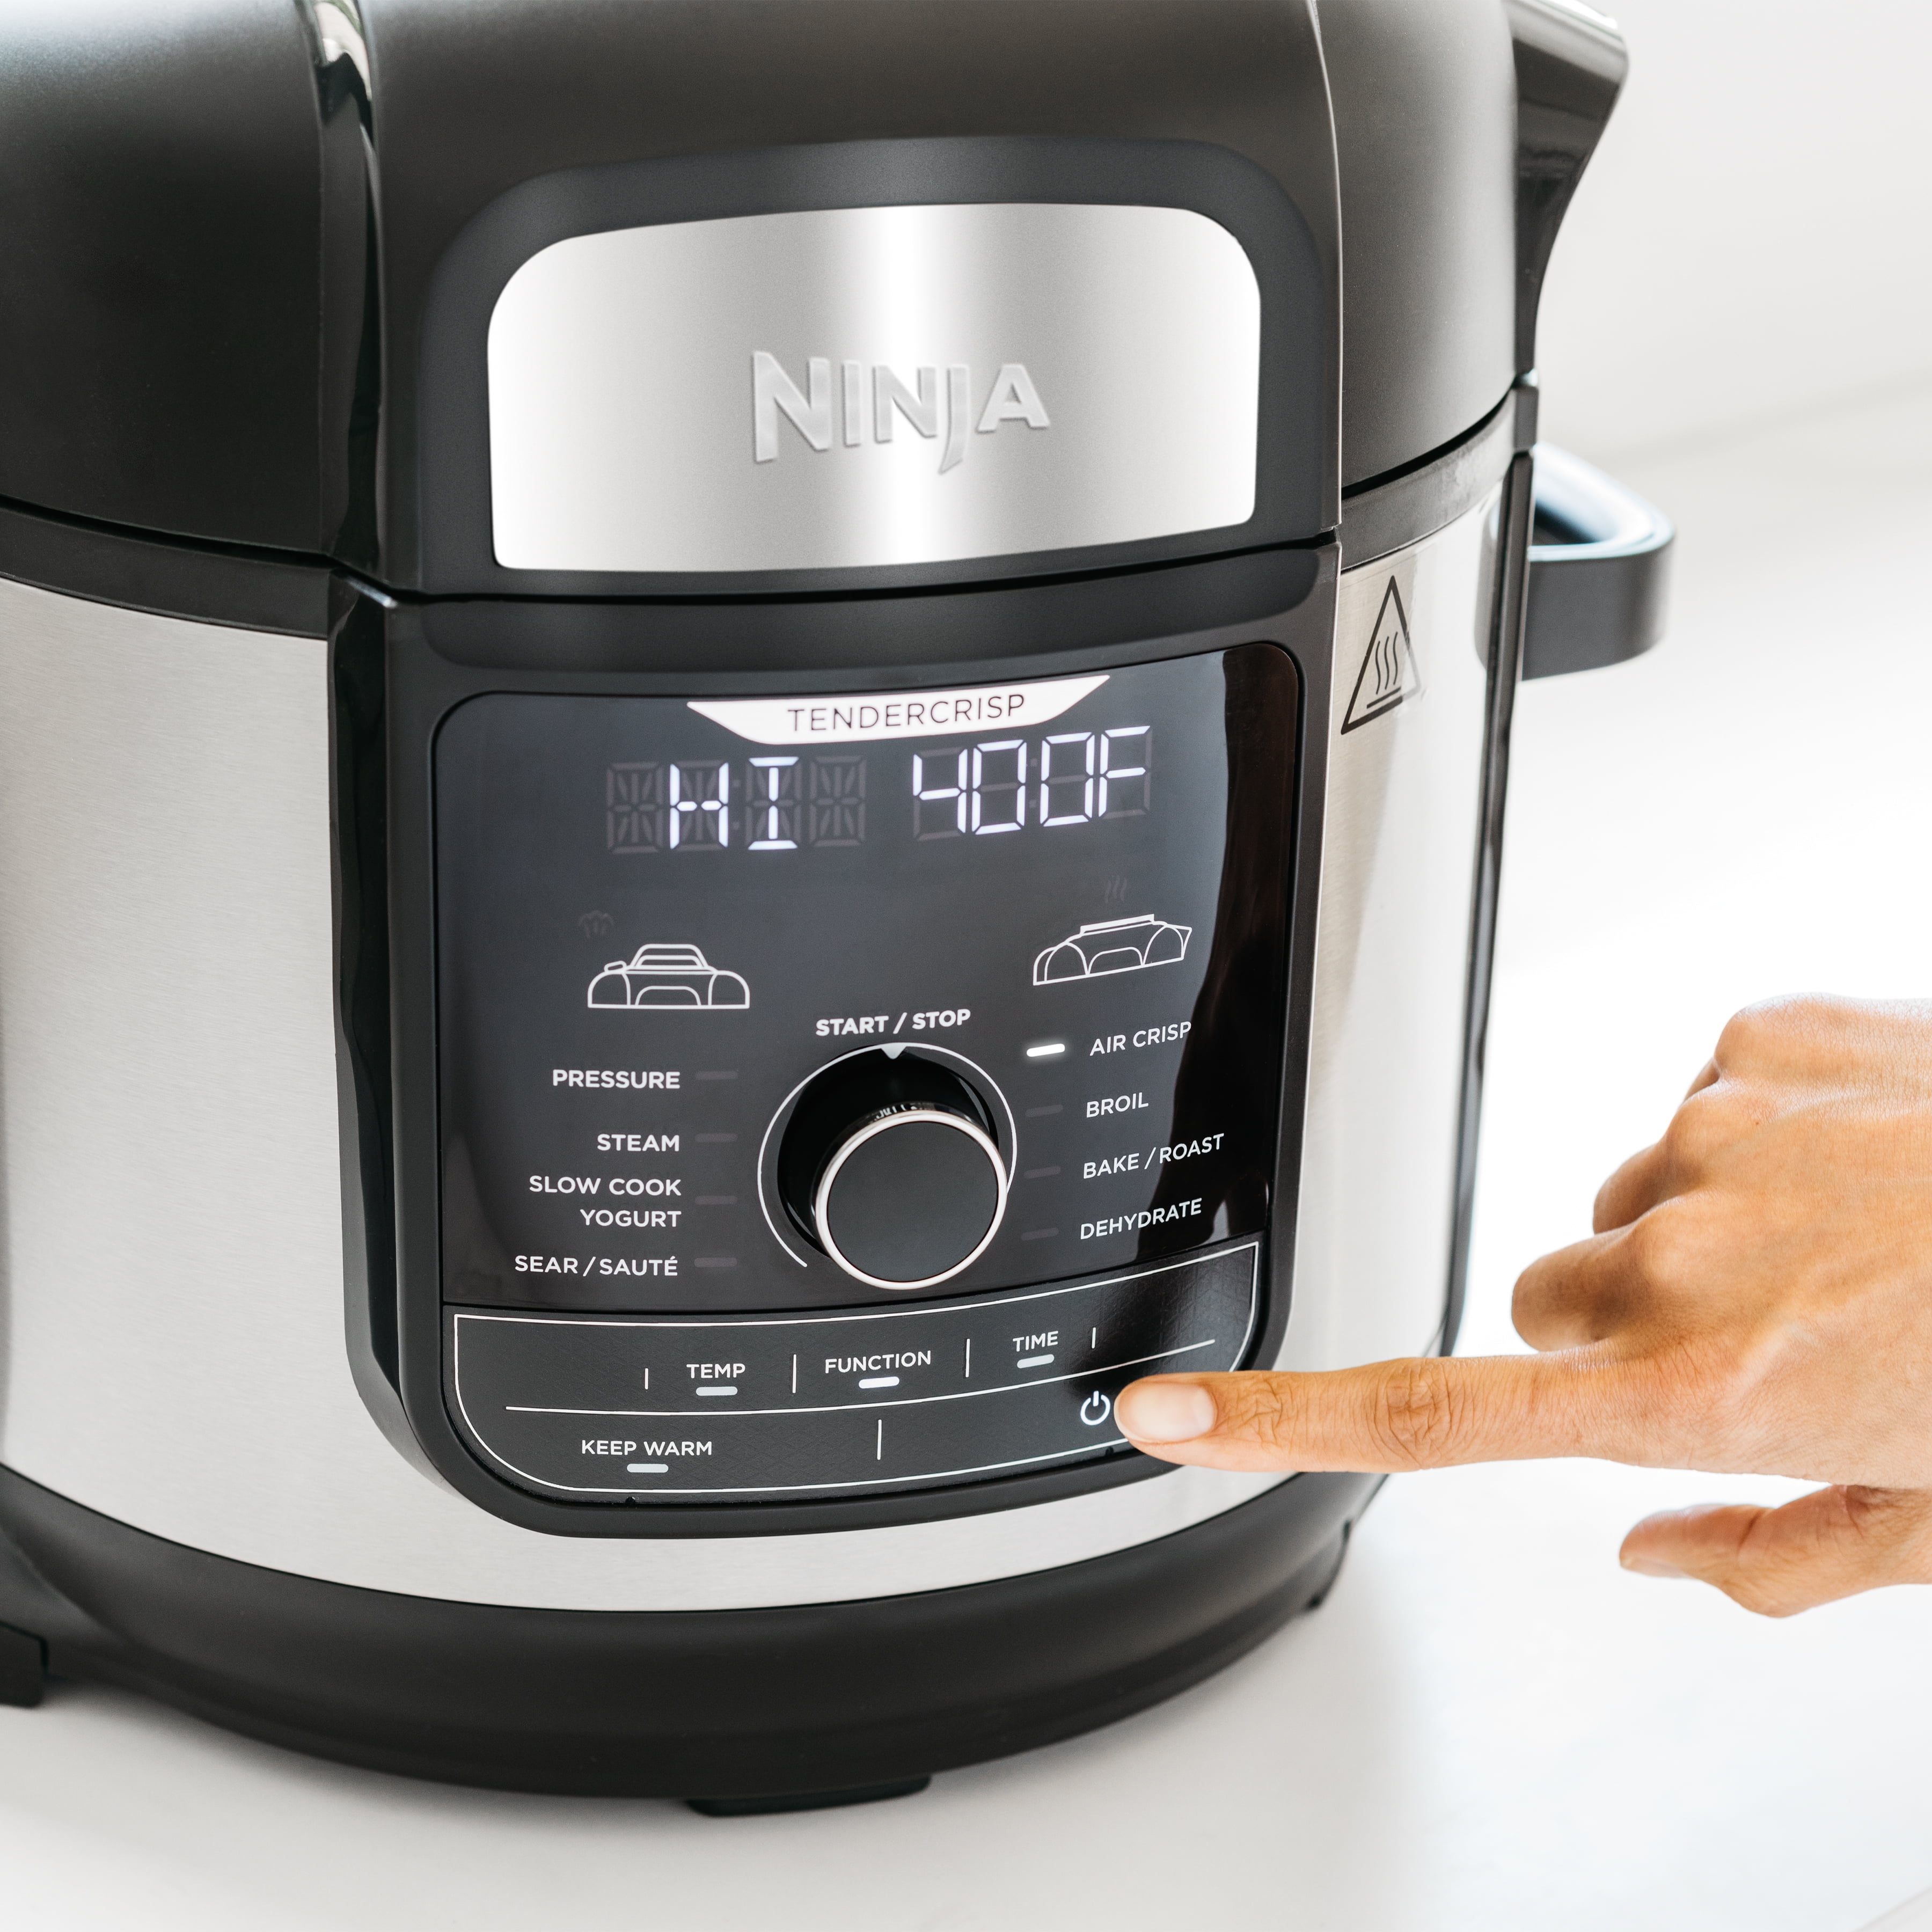 Just purchased the Ninja Foodi 8 QT XL Pressure Cooker, but